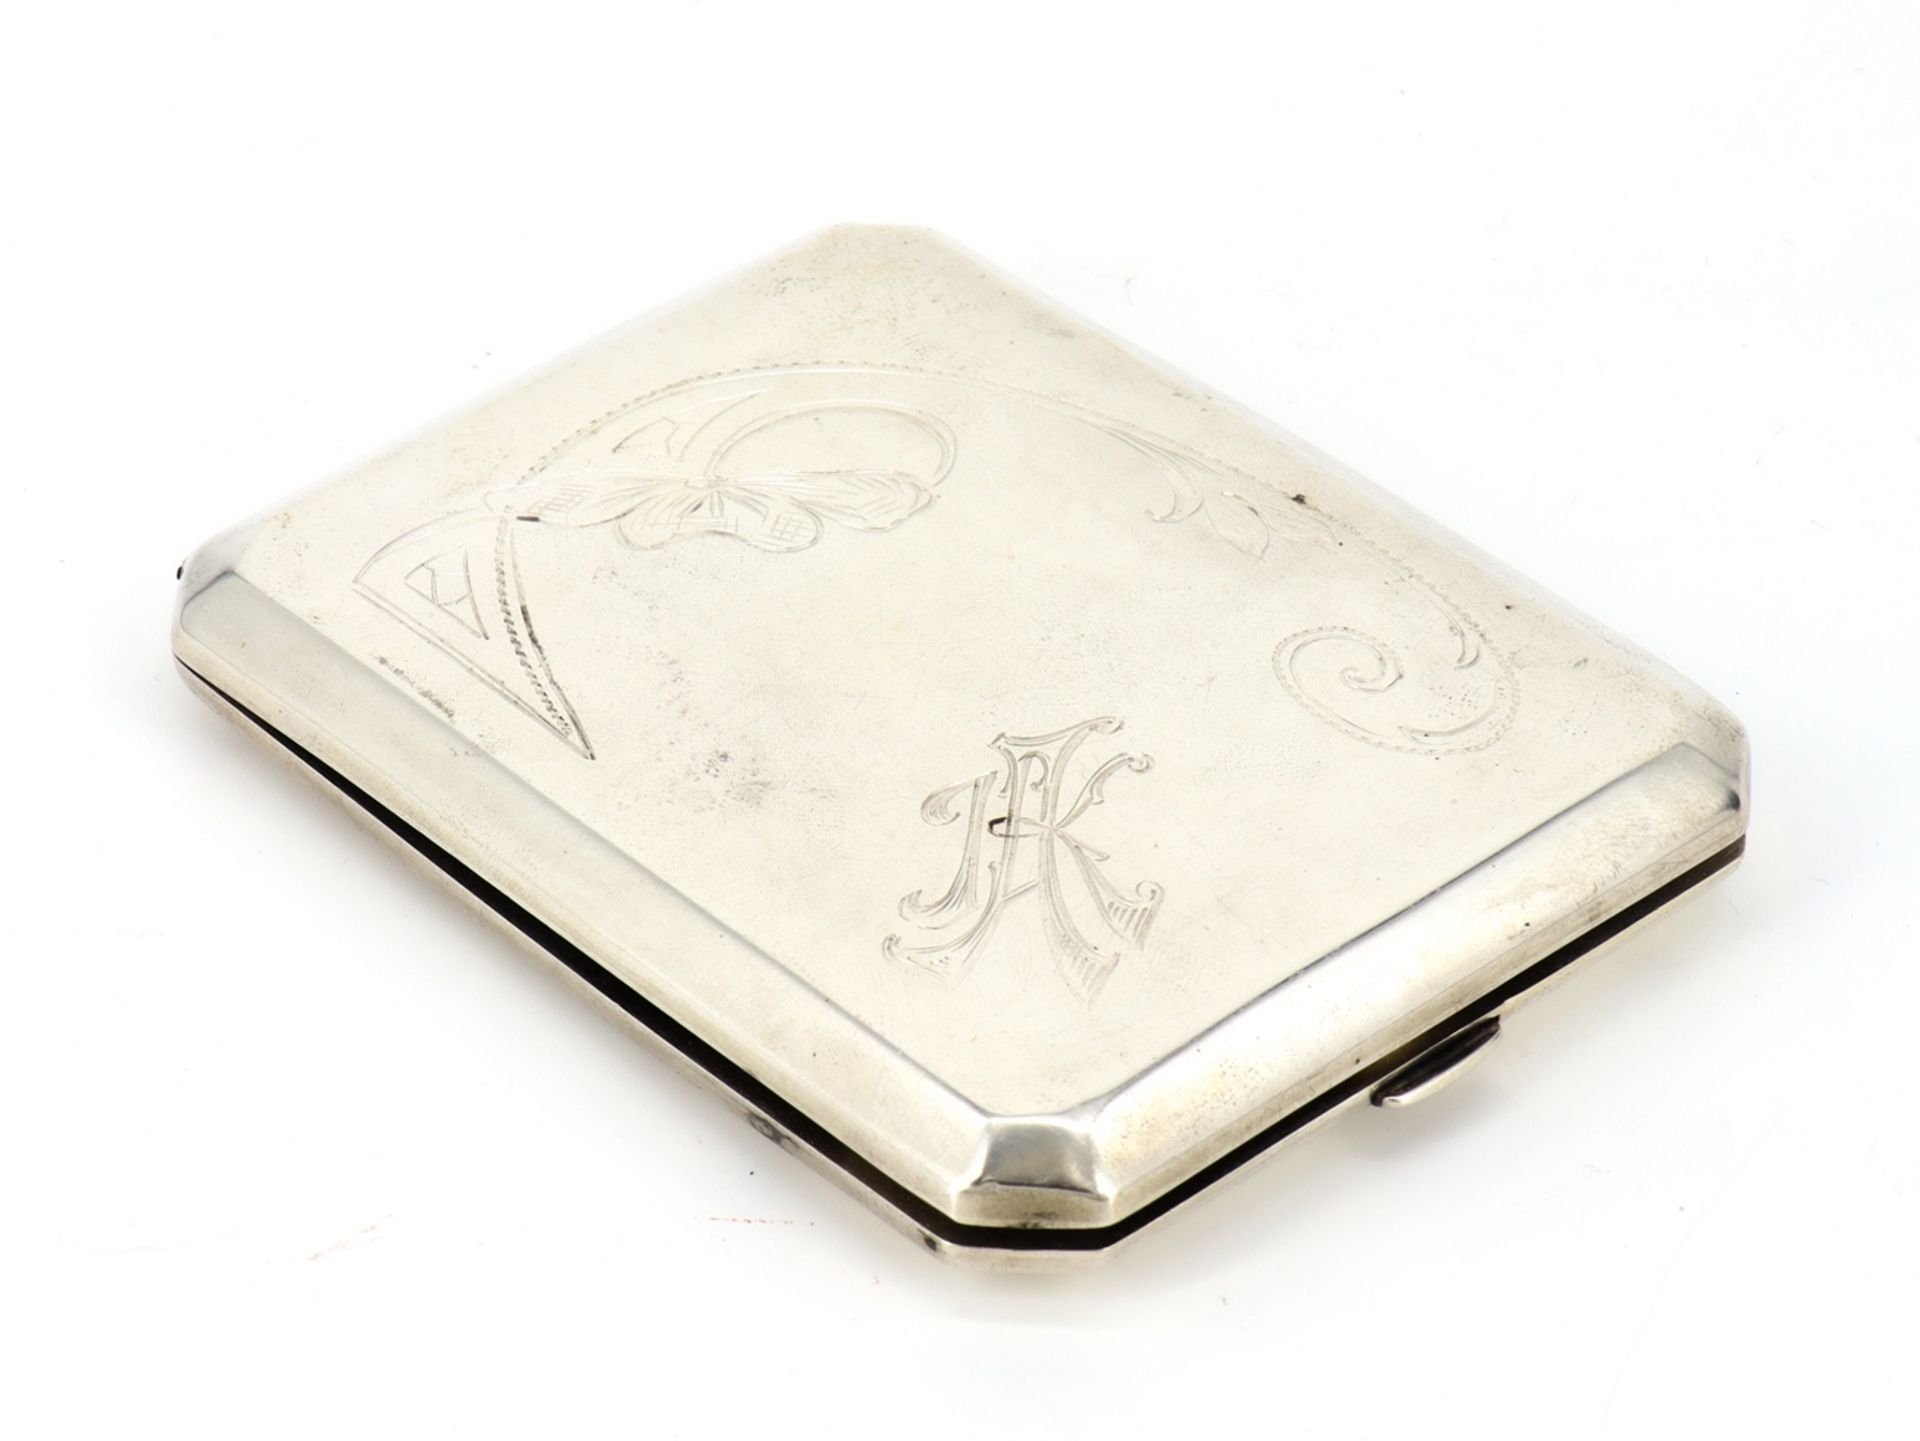 Art nouveau silver cigarette case, Baltic silver, around 1900